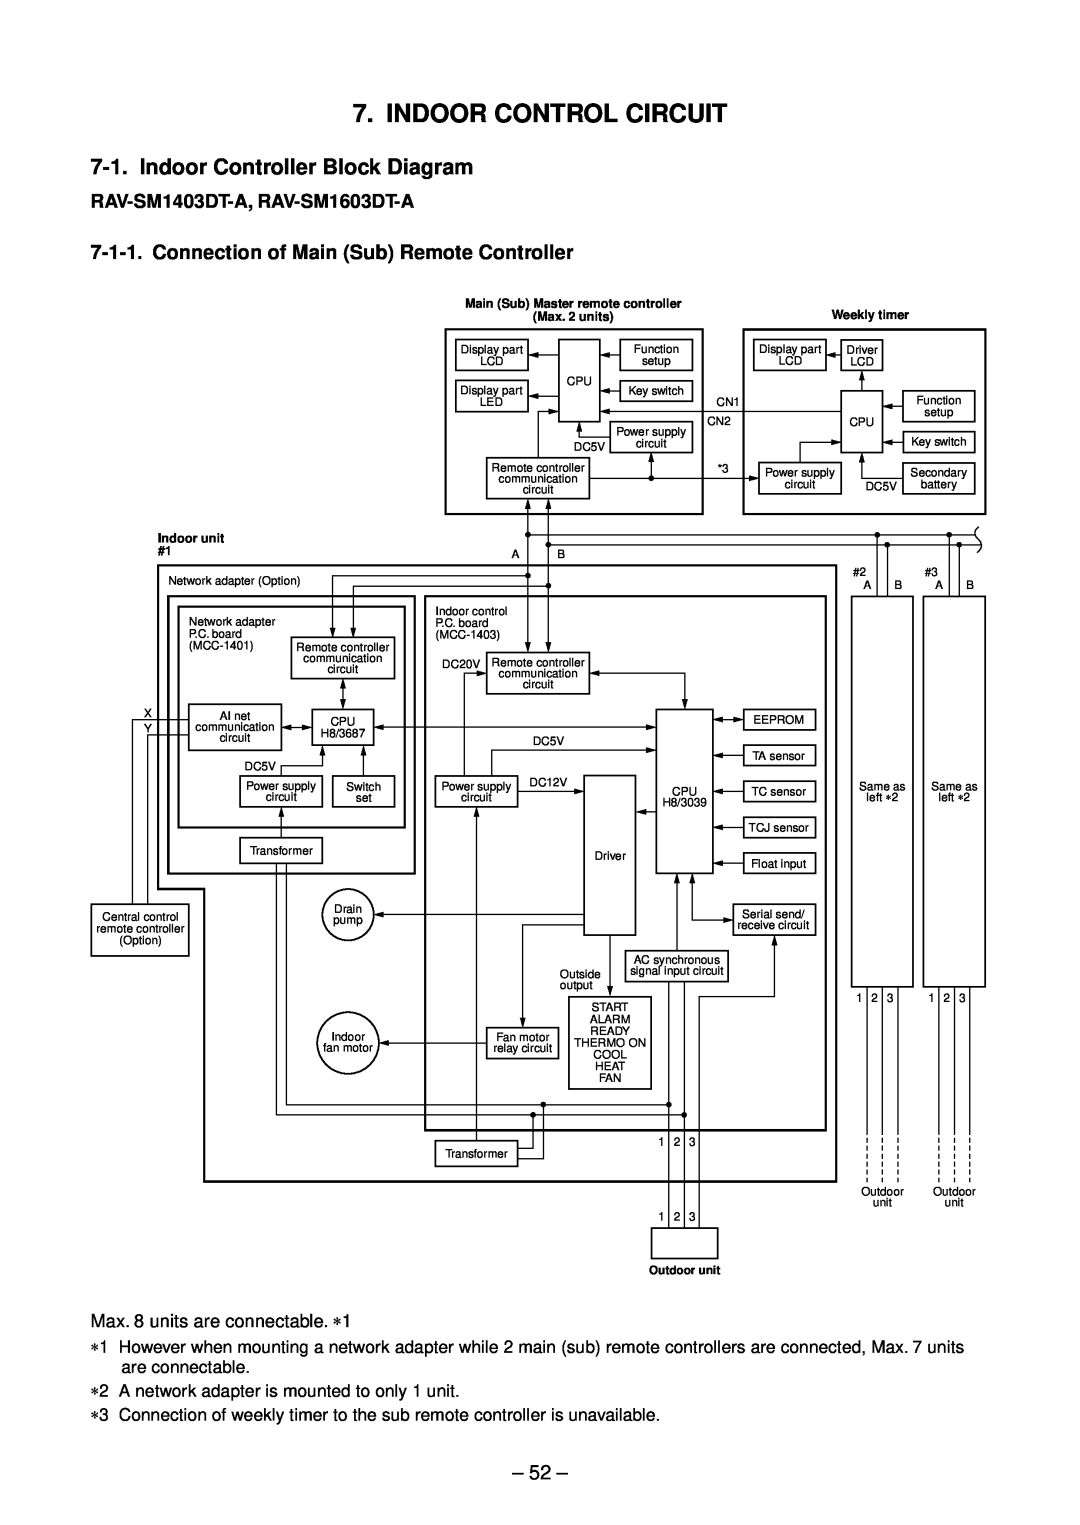 Toshiba RAV-SM1603DT-A Indoor Control Circuit, Indoor Controller Block Diagram, Connection of Main Sub Remote Controller 